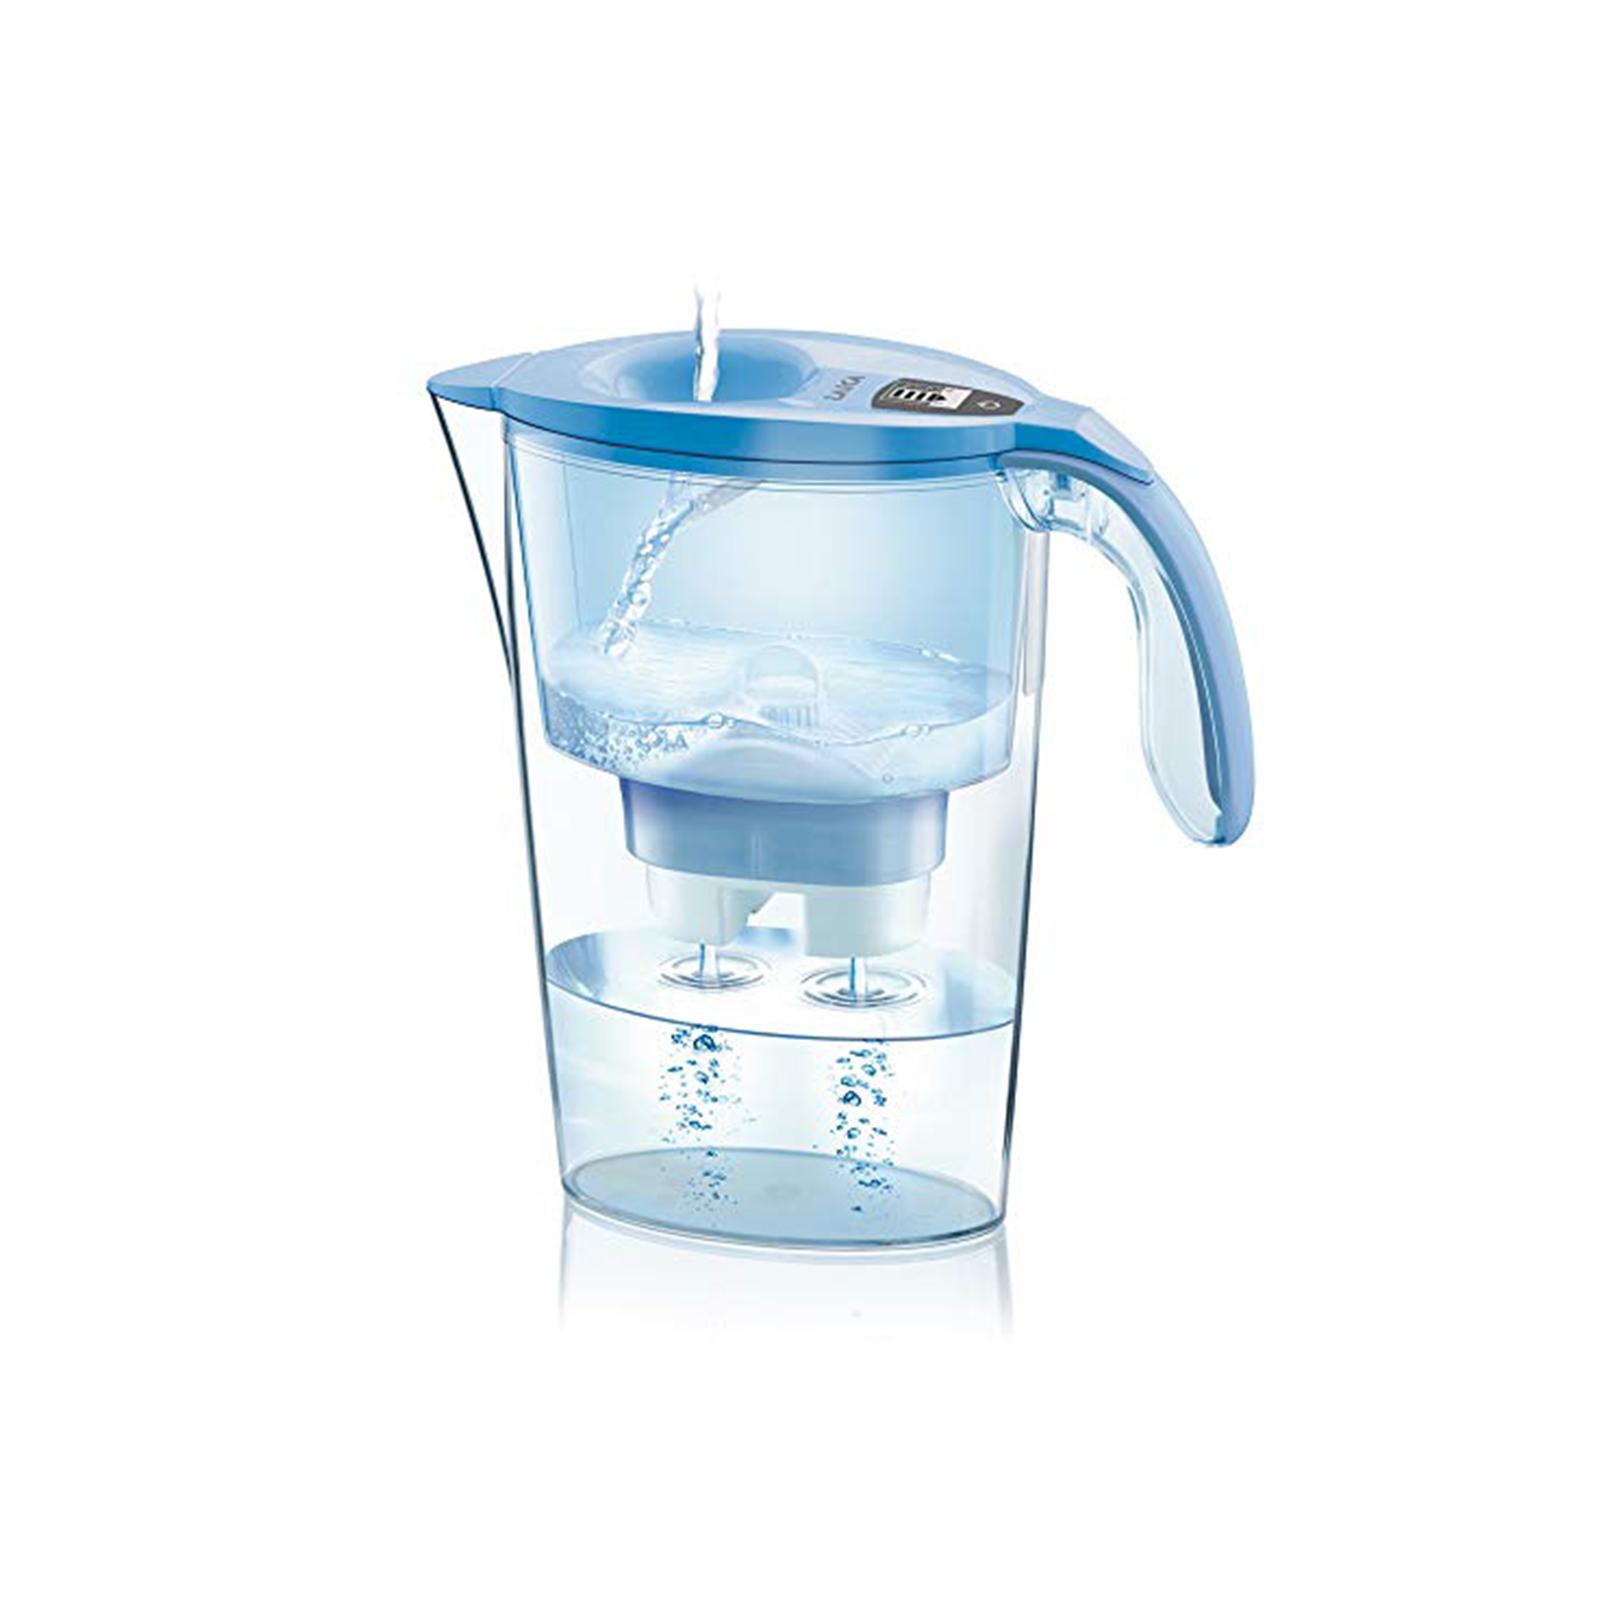 Water filter, Azul LAICA LA186